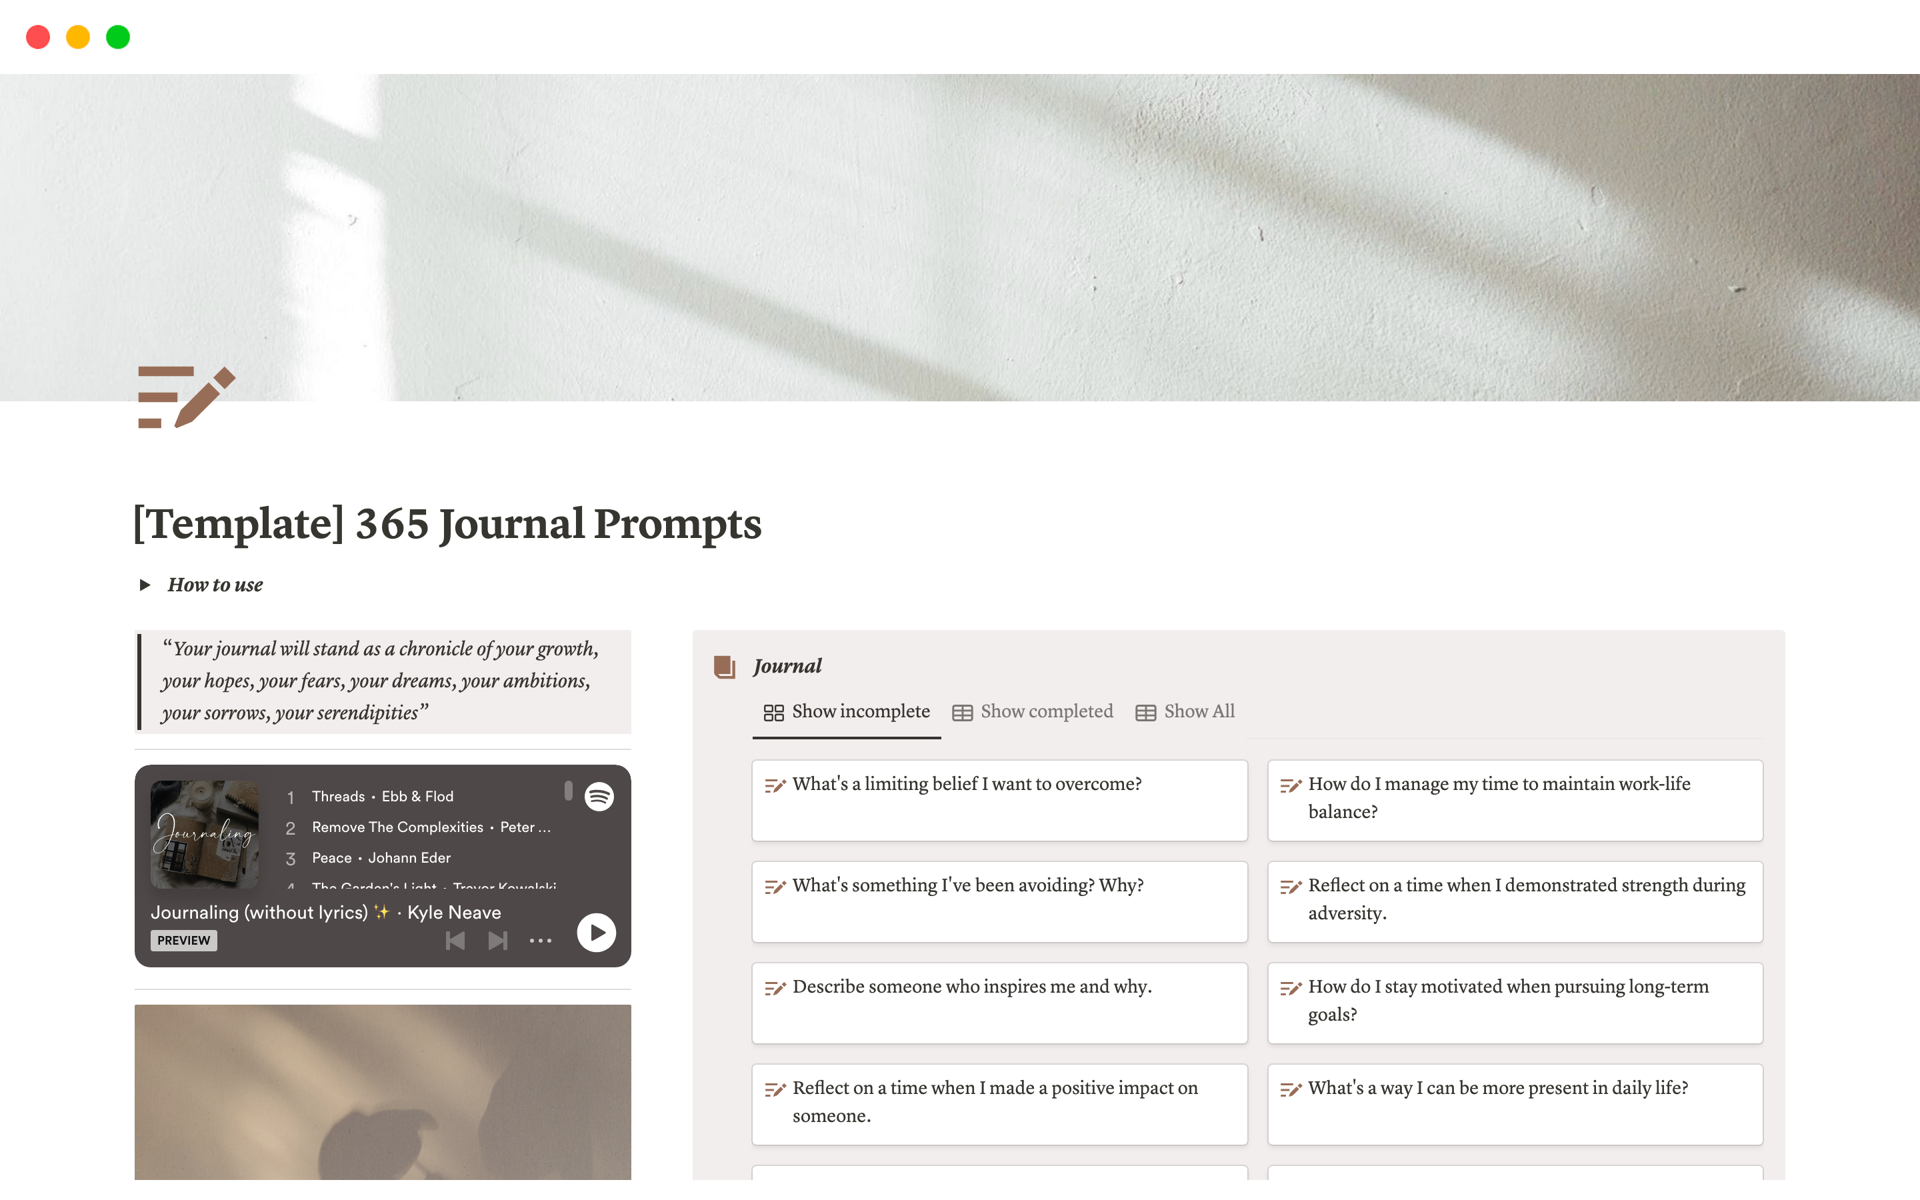 Uma prévia do modelo para 365 Day Journal Prompts | 1 Year of Journalling